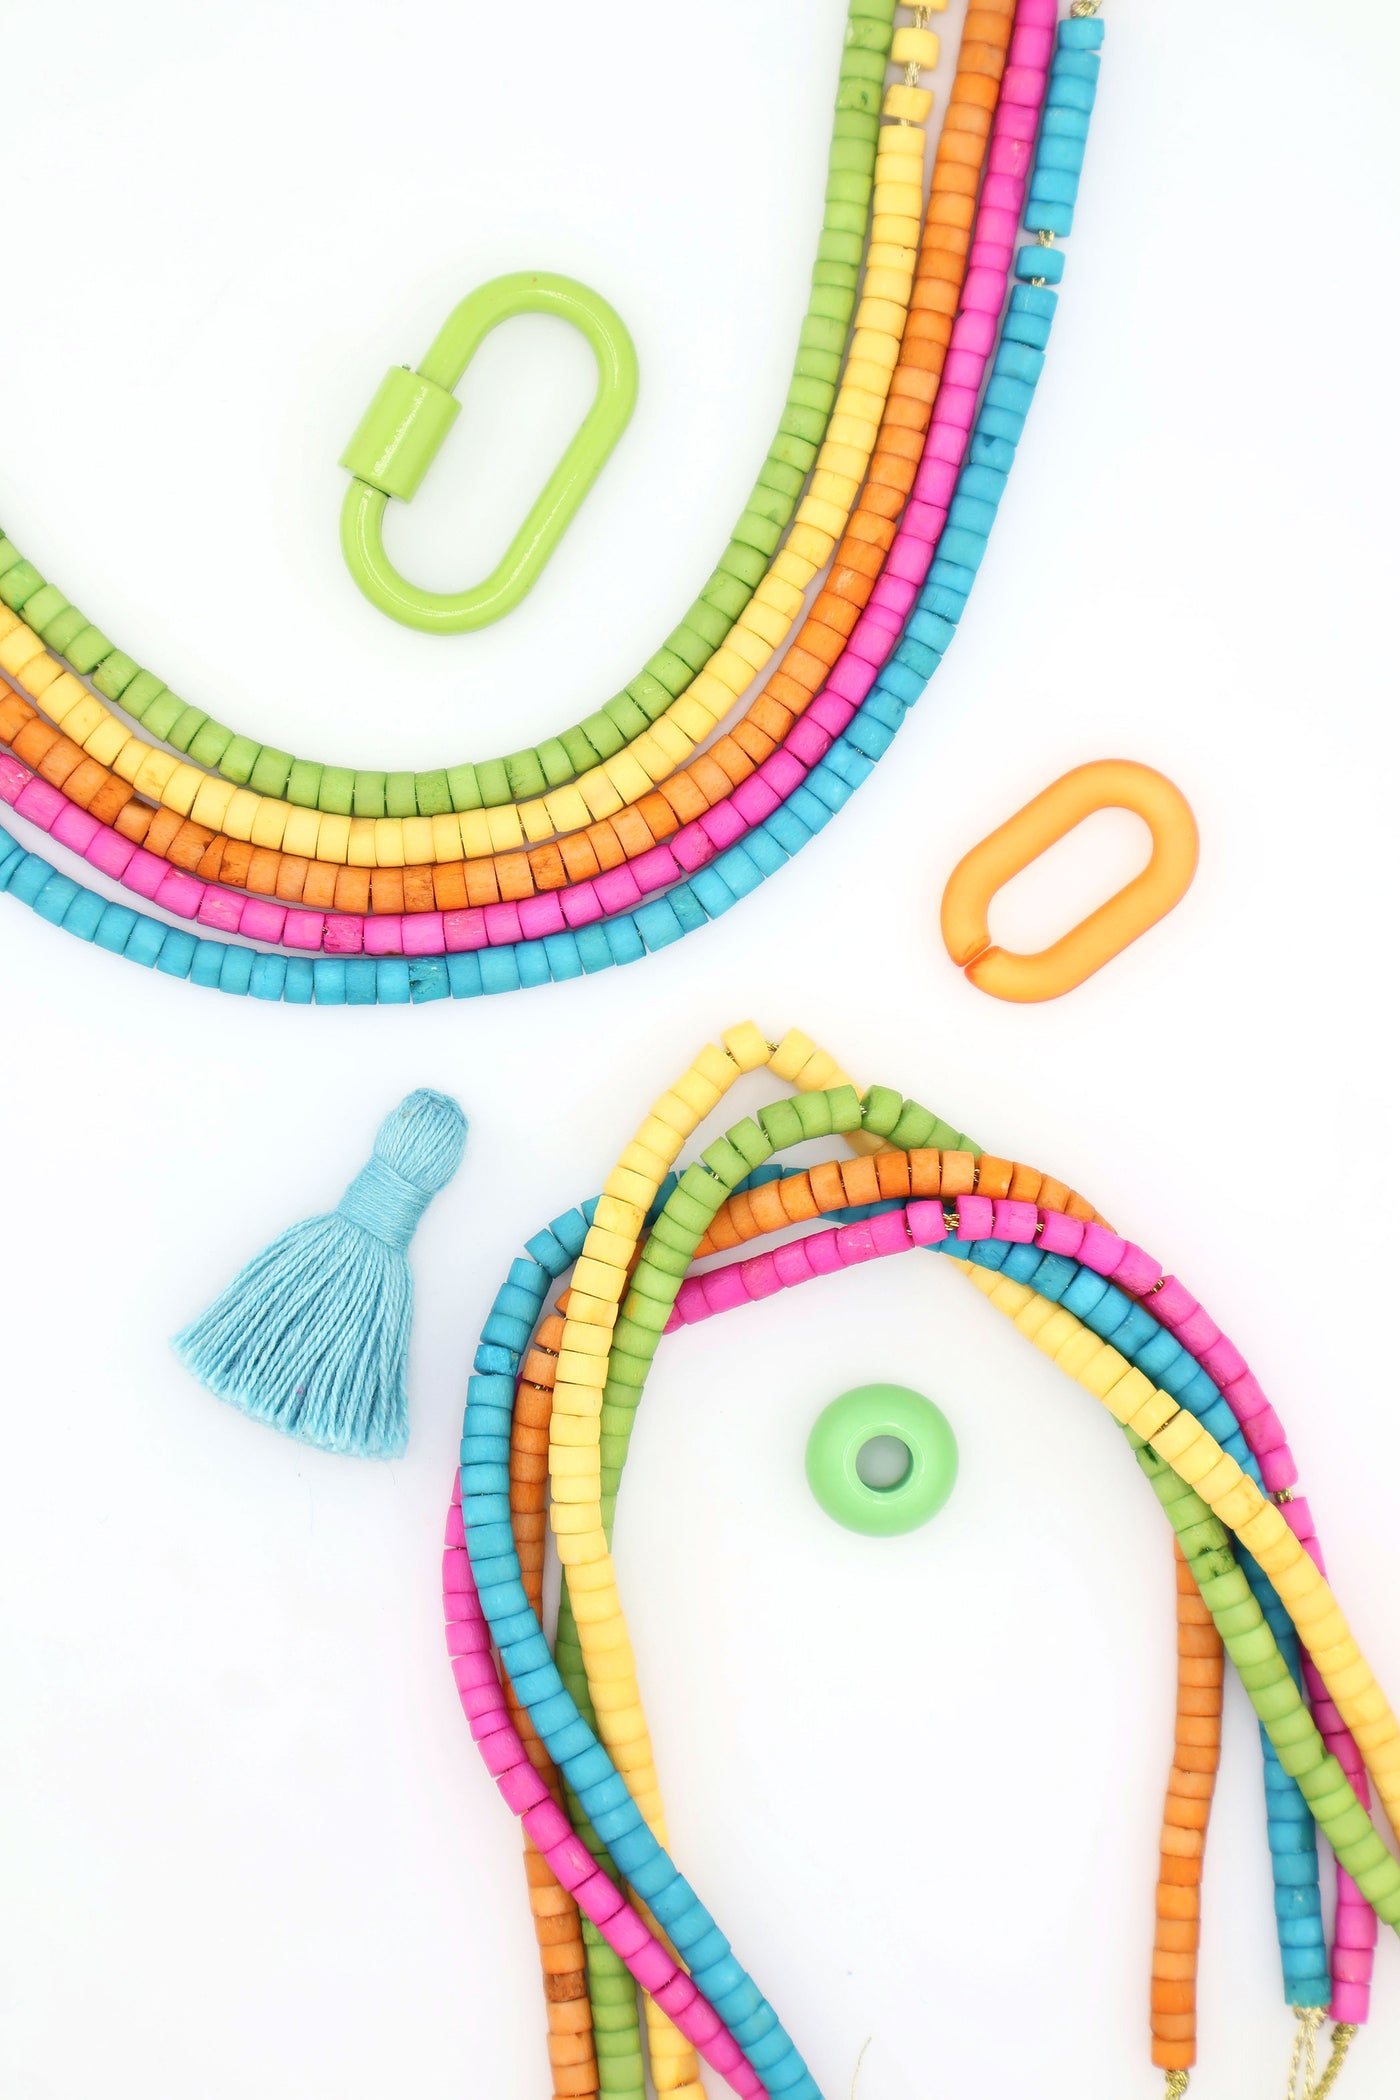 Bead Bundle: Vibrant Pastels Handmade Heishi Bone Beads, 5x3mm, 5 Strands & Colors, 400+ Beads